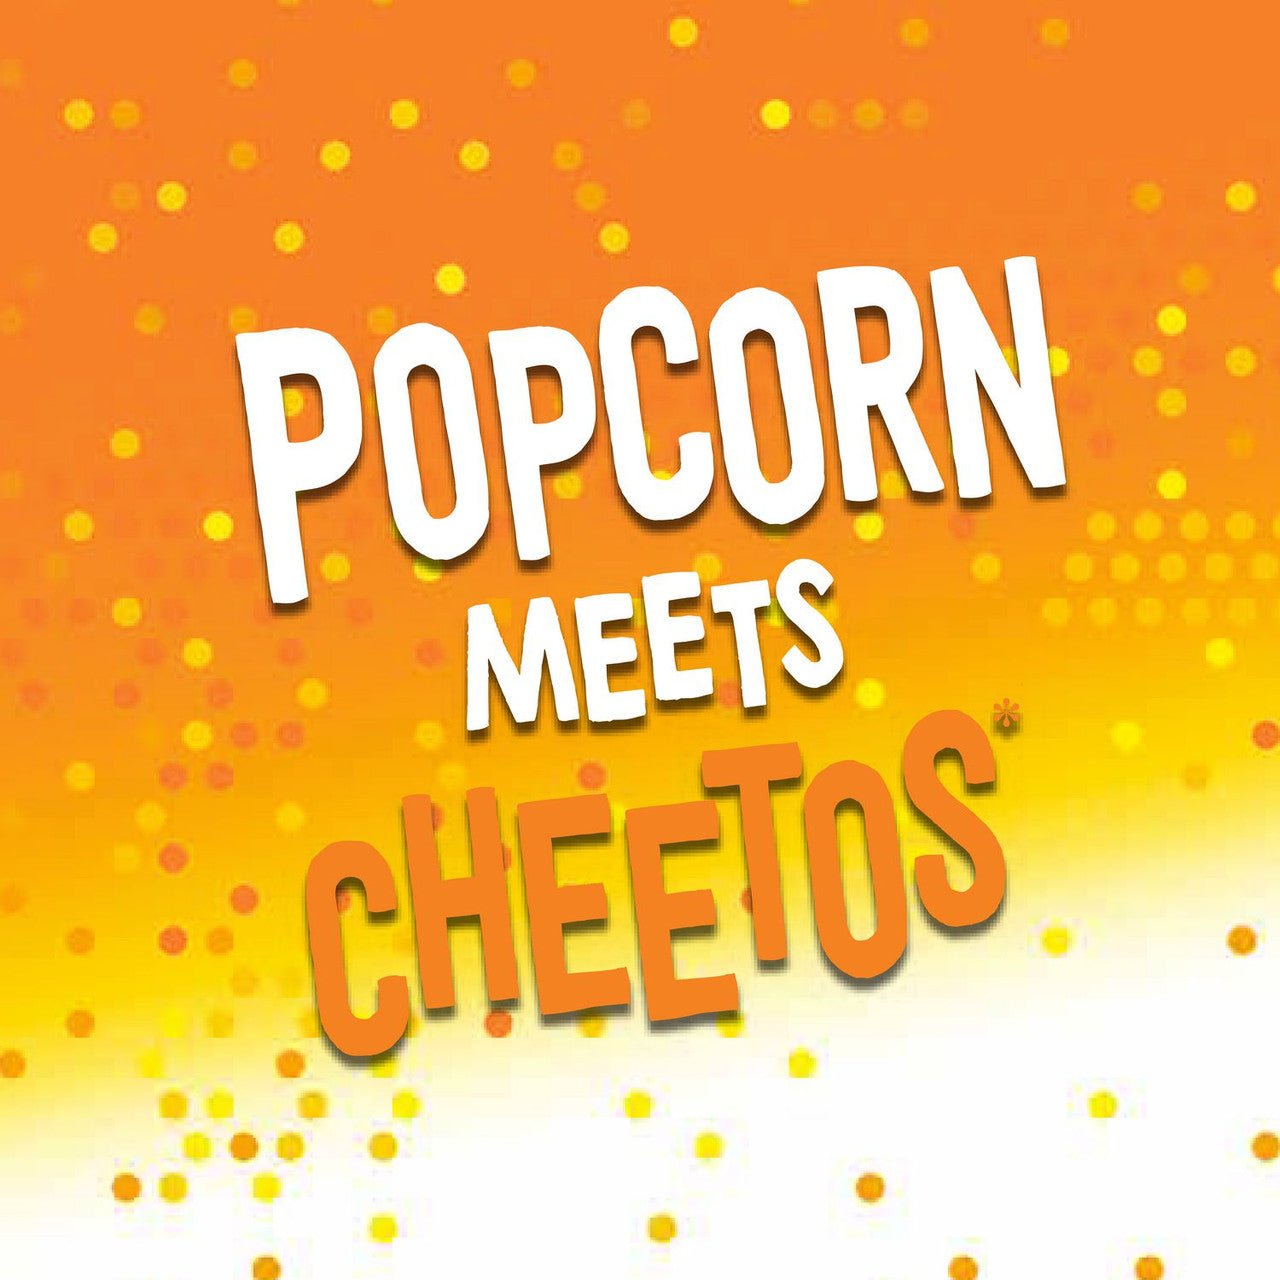 Cheetos Popcorn Cheddar Flavor, 180g/6.3 oz. {Imported from Canada}